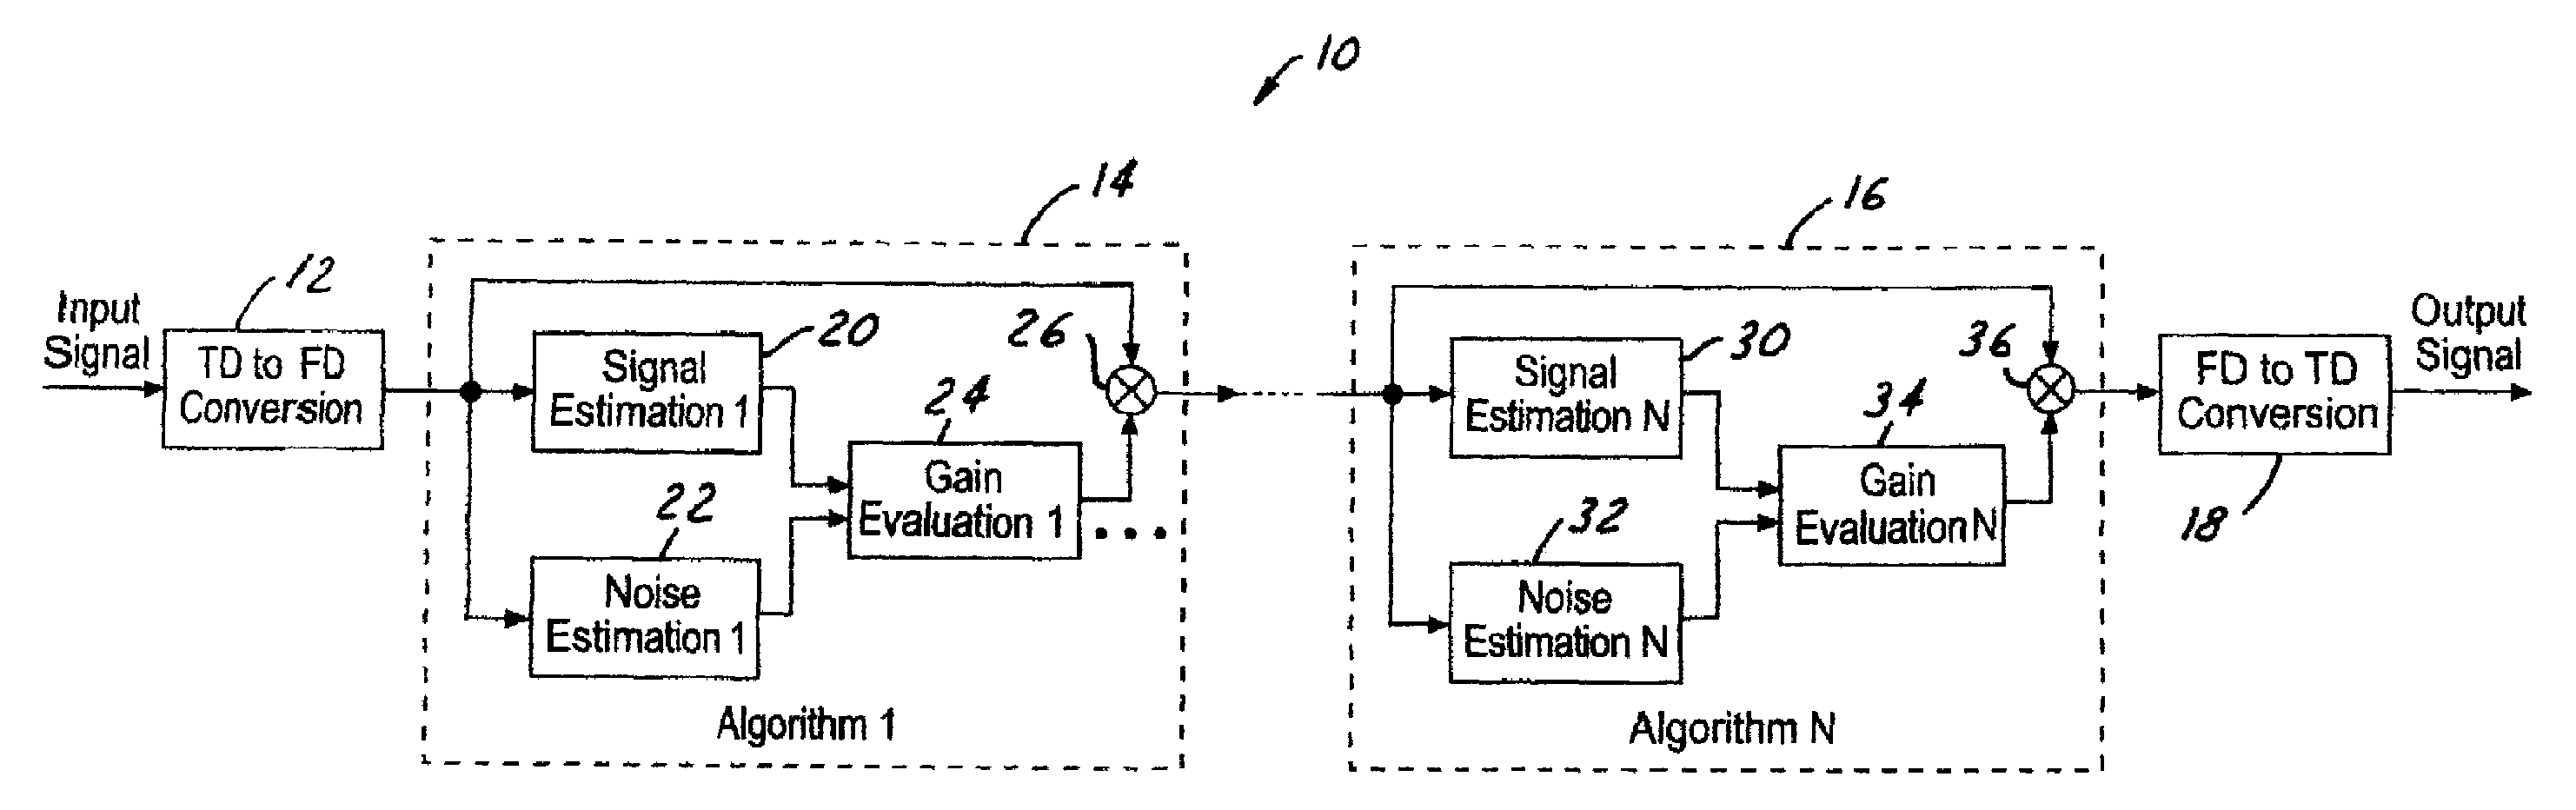 Method of cascading noise reduction algorithms to avoid speech distortion